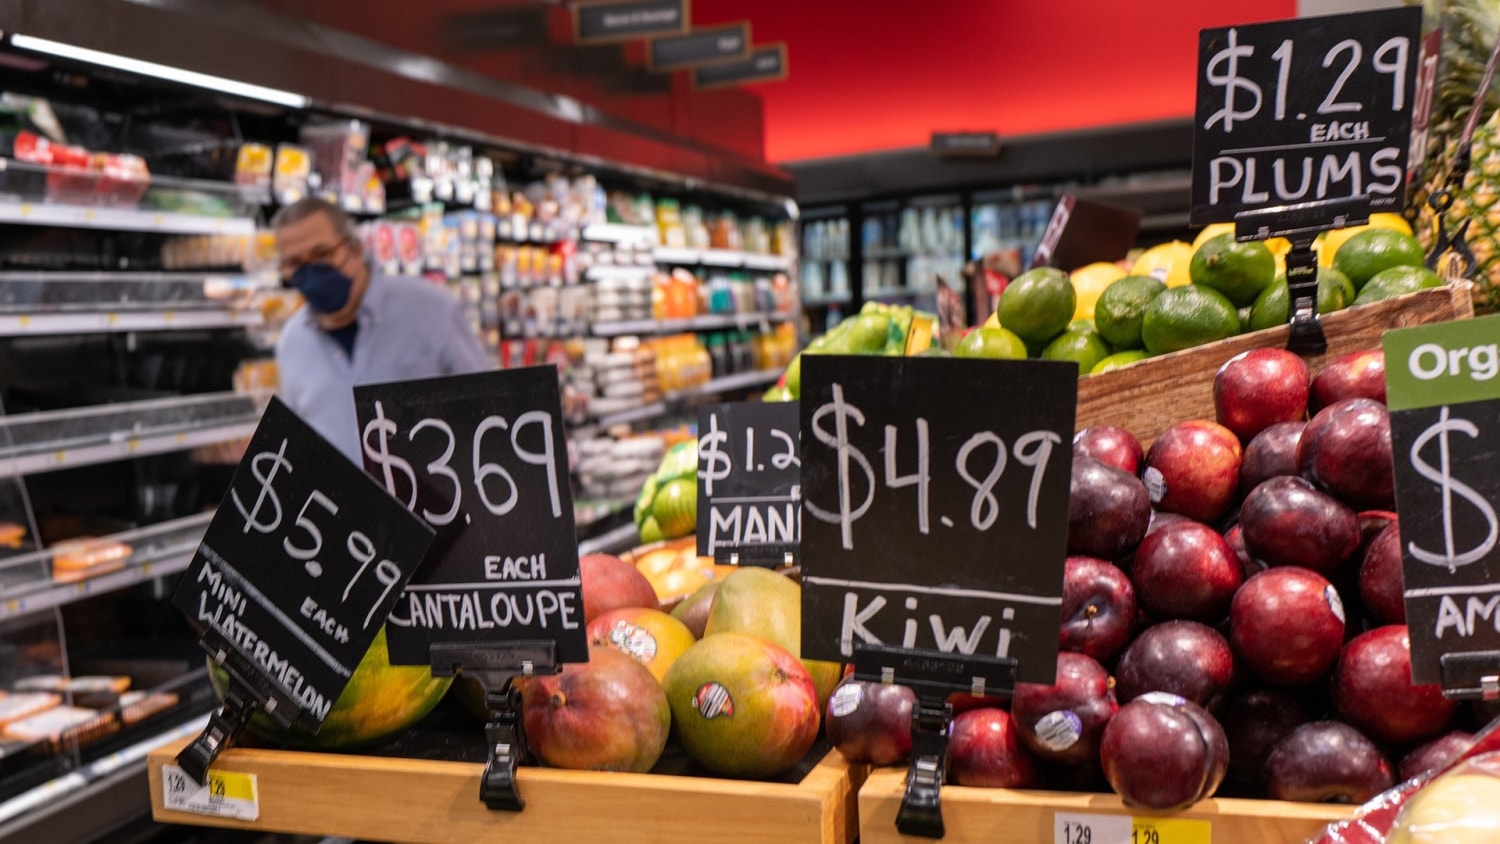 Cost-saving supermarket deals